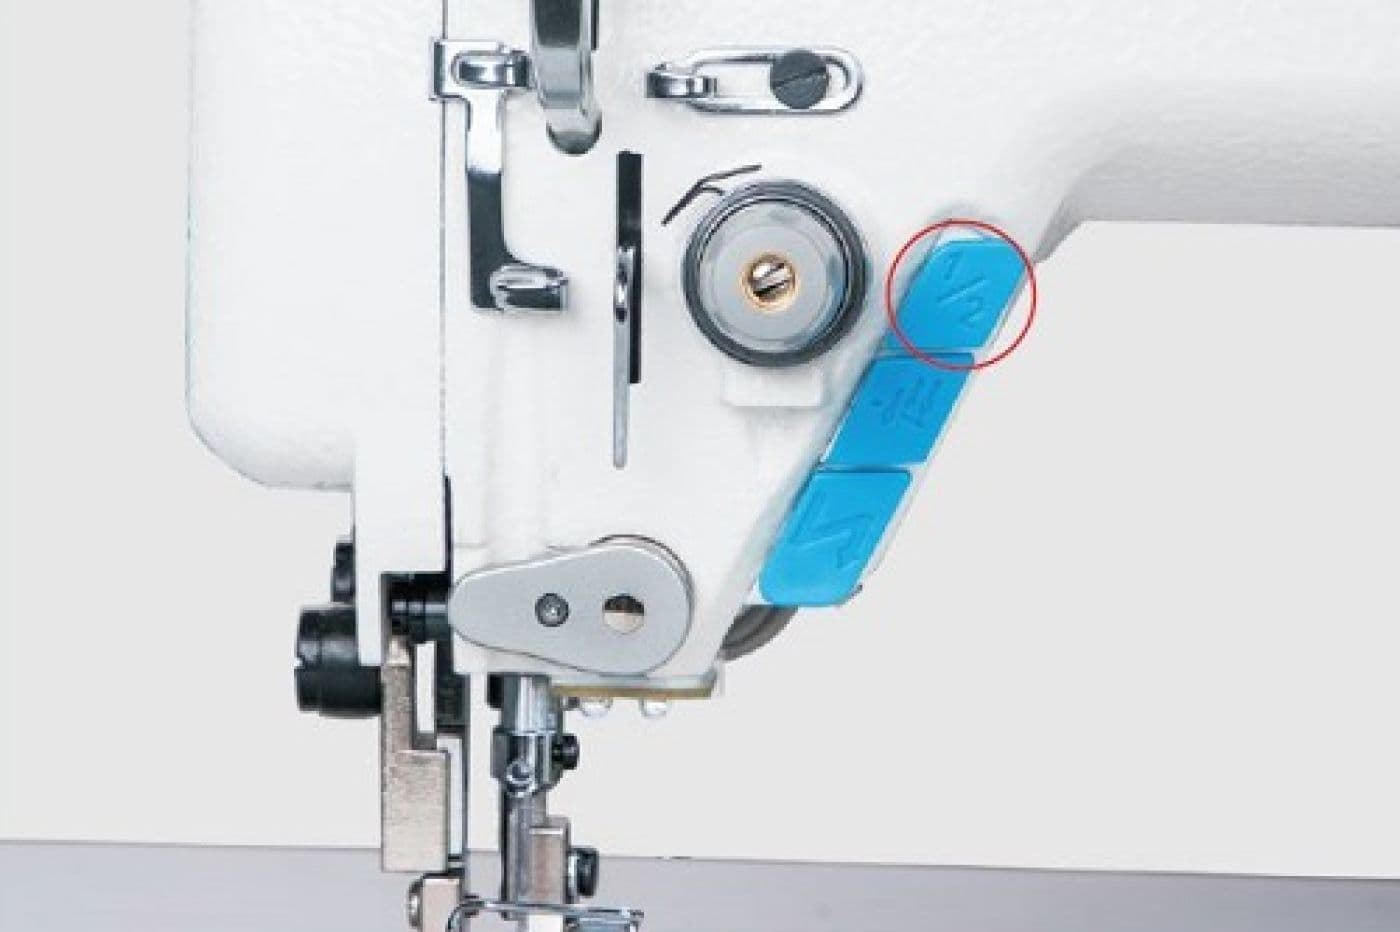 JACK JK-H6-CZ-4 DOBLE ARRASTRE CORTAHILOS - Máquina de coser industrial doble arrastre - Imagen 8